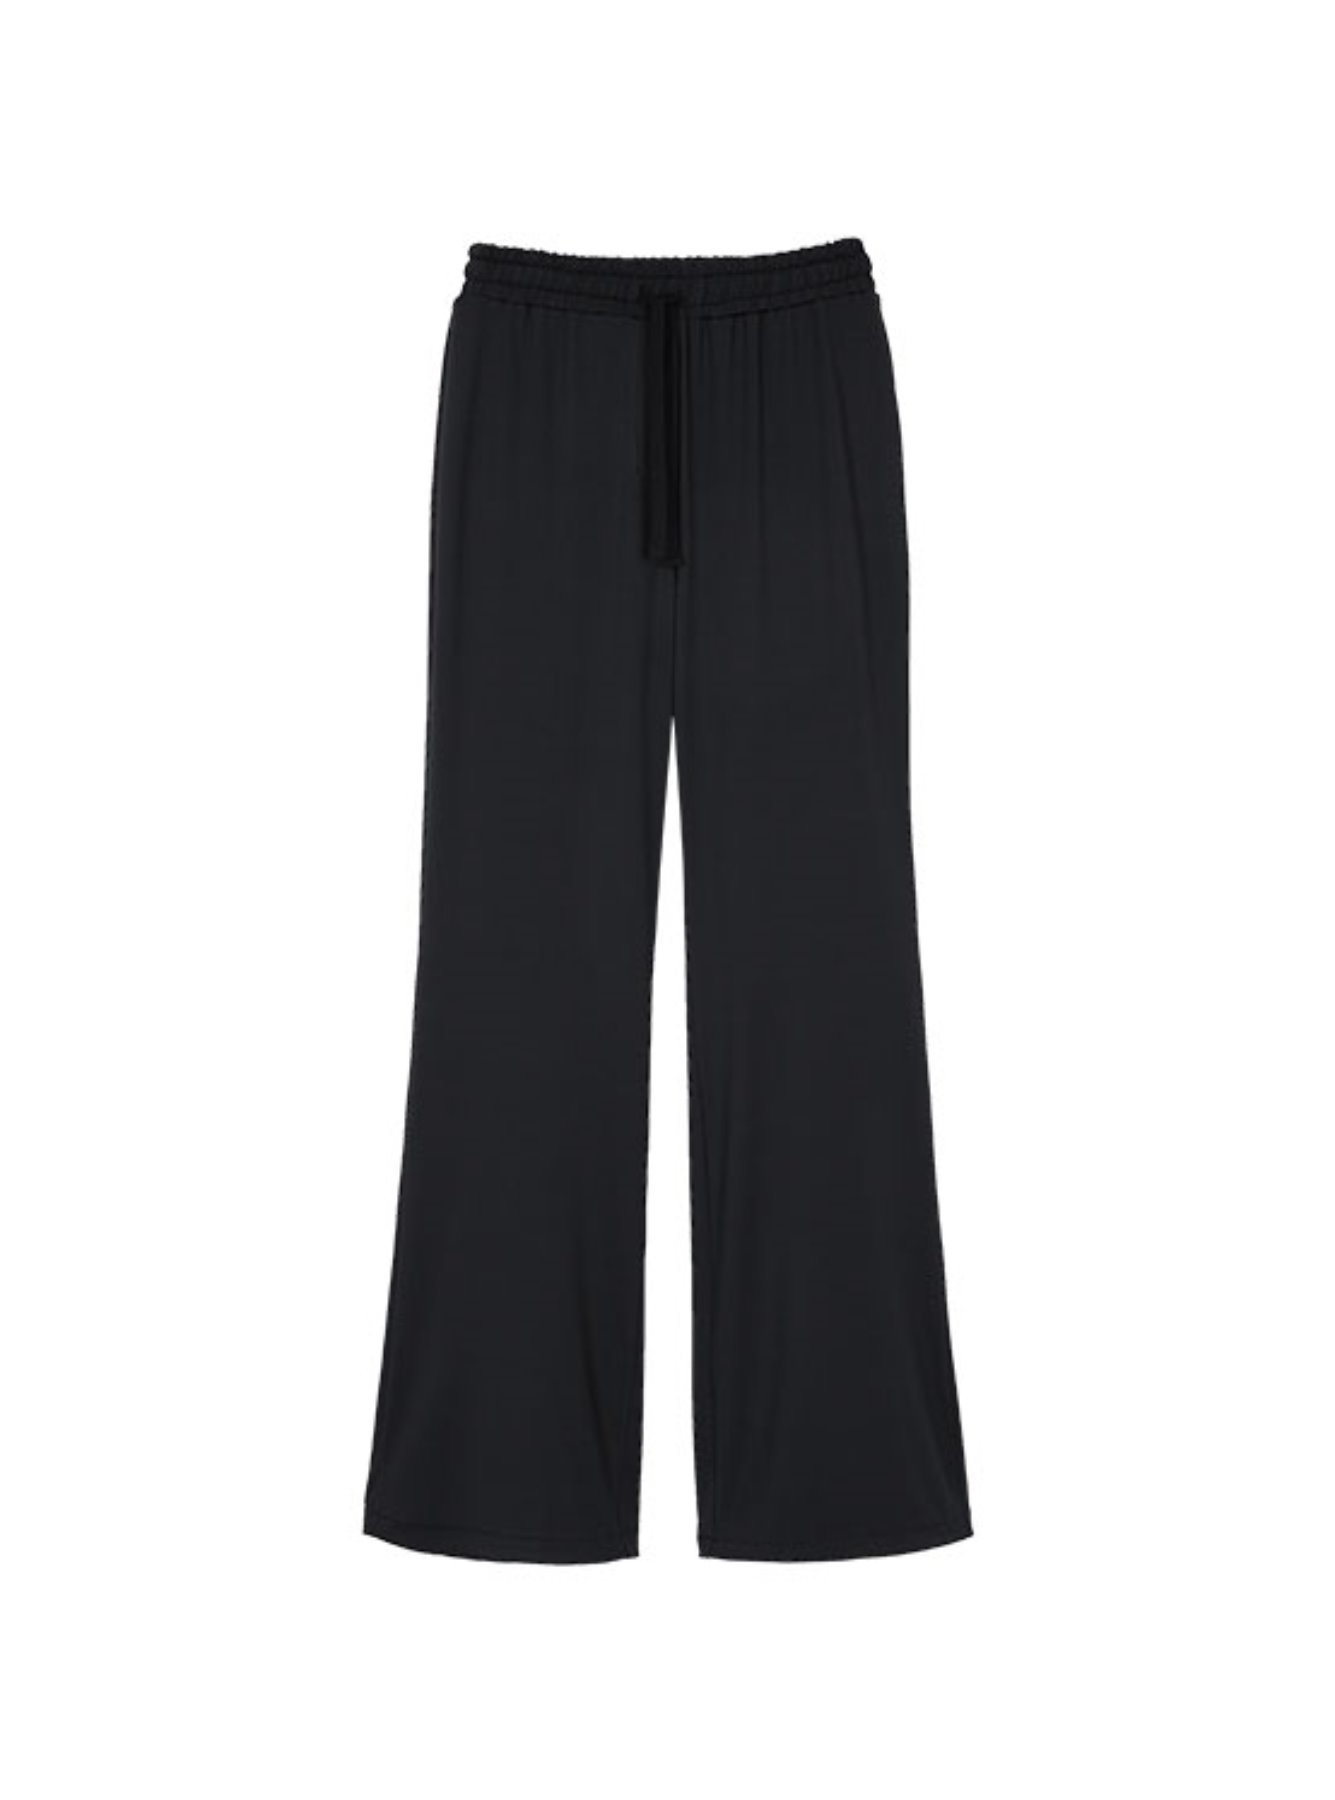 Bootcut Jersey Pants in Black VW2ML169-10